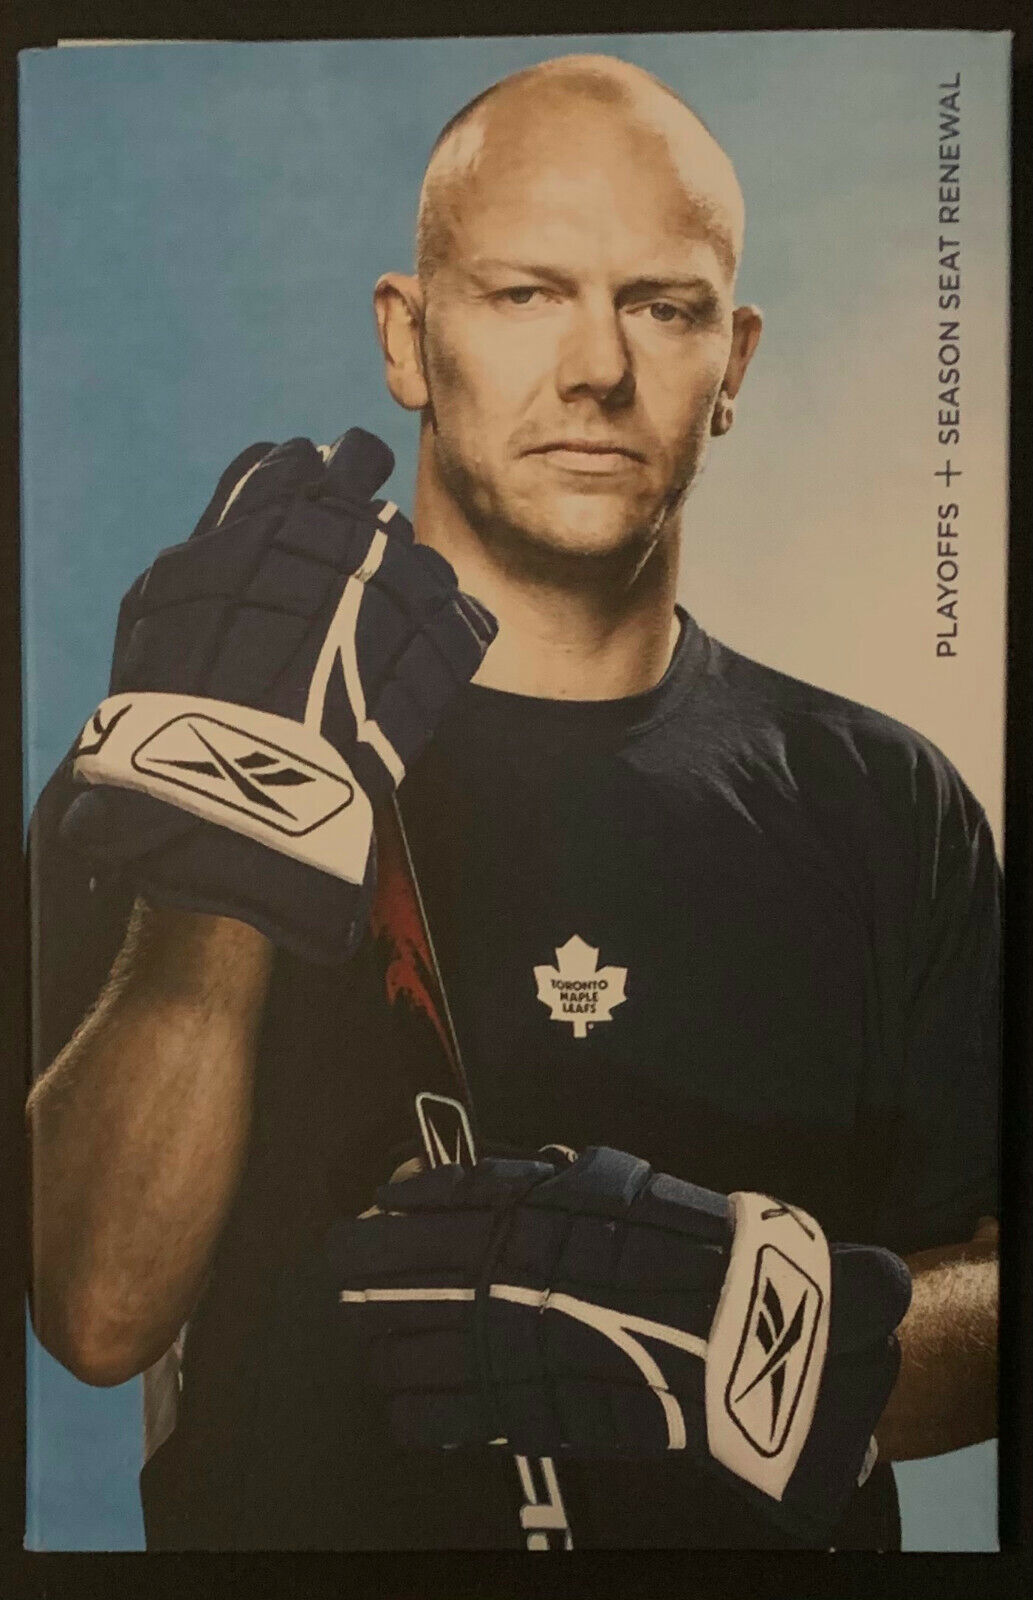 2007 Toronto Maple Leafs NHL Hockey Ticket Holder Booklet Matts Sundin